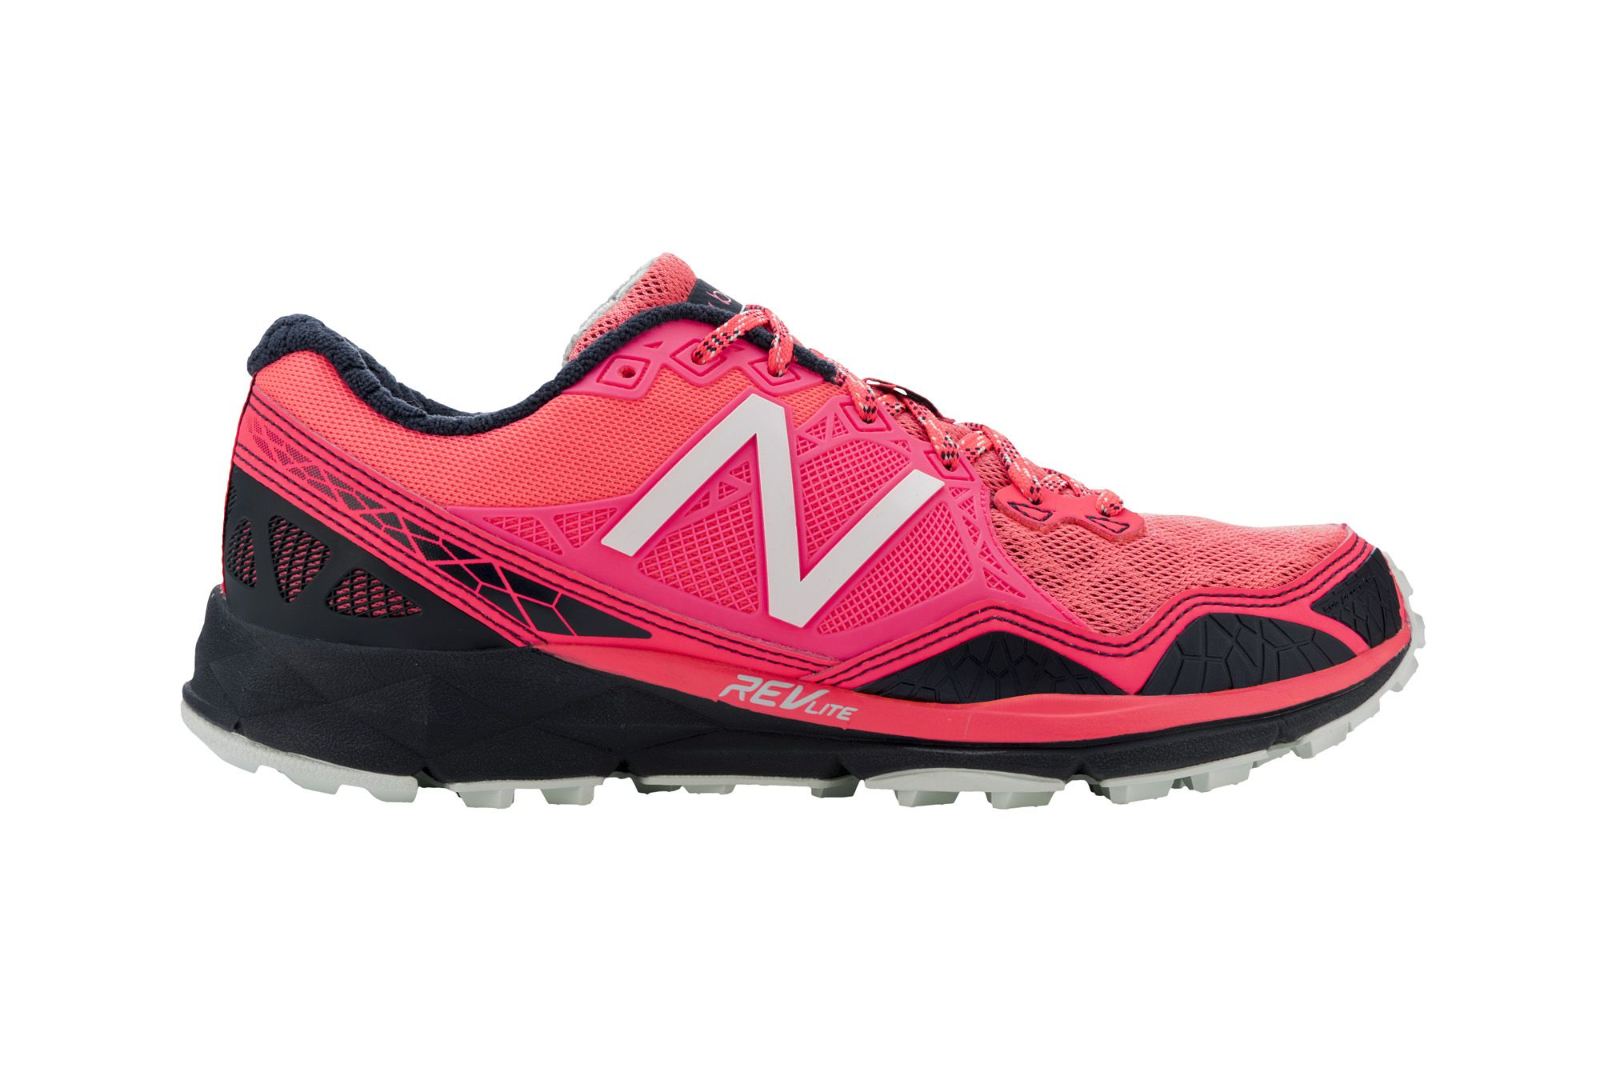 New Balance Womens Performance T910V3 Shoe Pink Size 6 #NGZQ9-M399